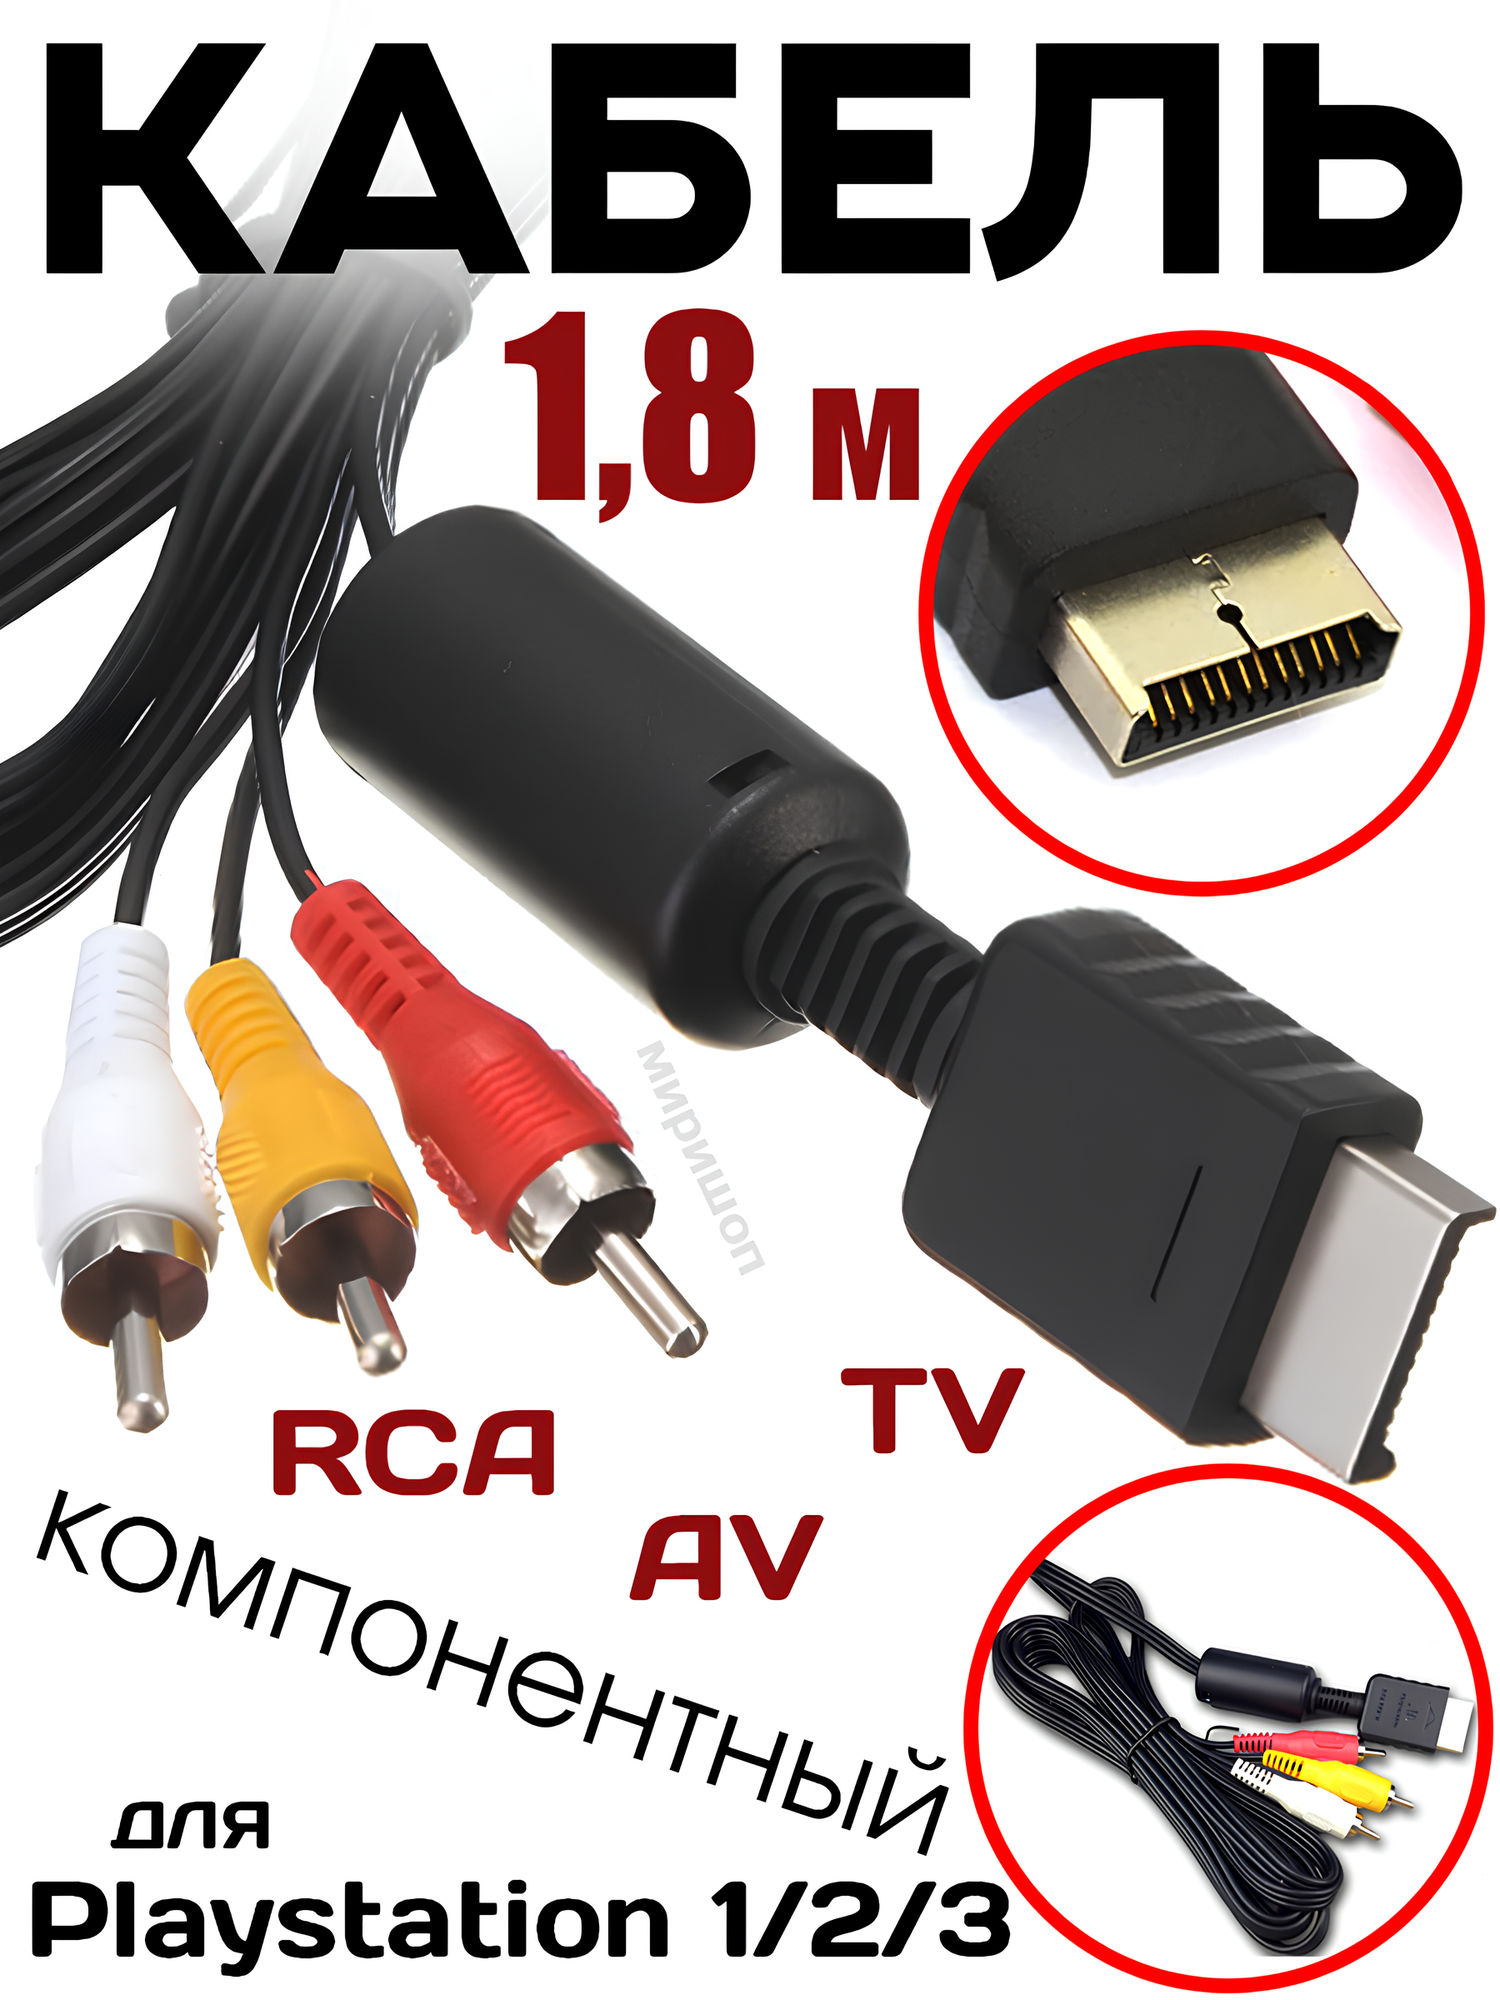 Кабель компонентный (AV TV RCA) для Playstation 1 / 2 / 3 1.8 м